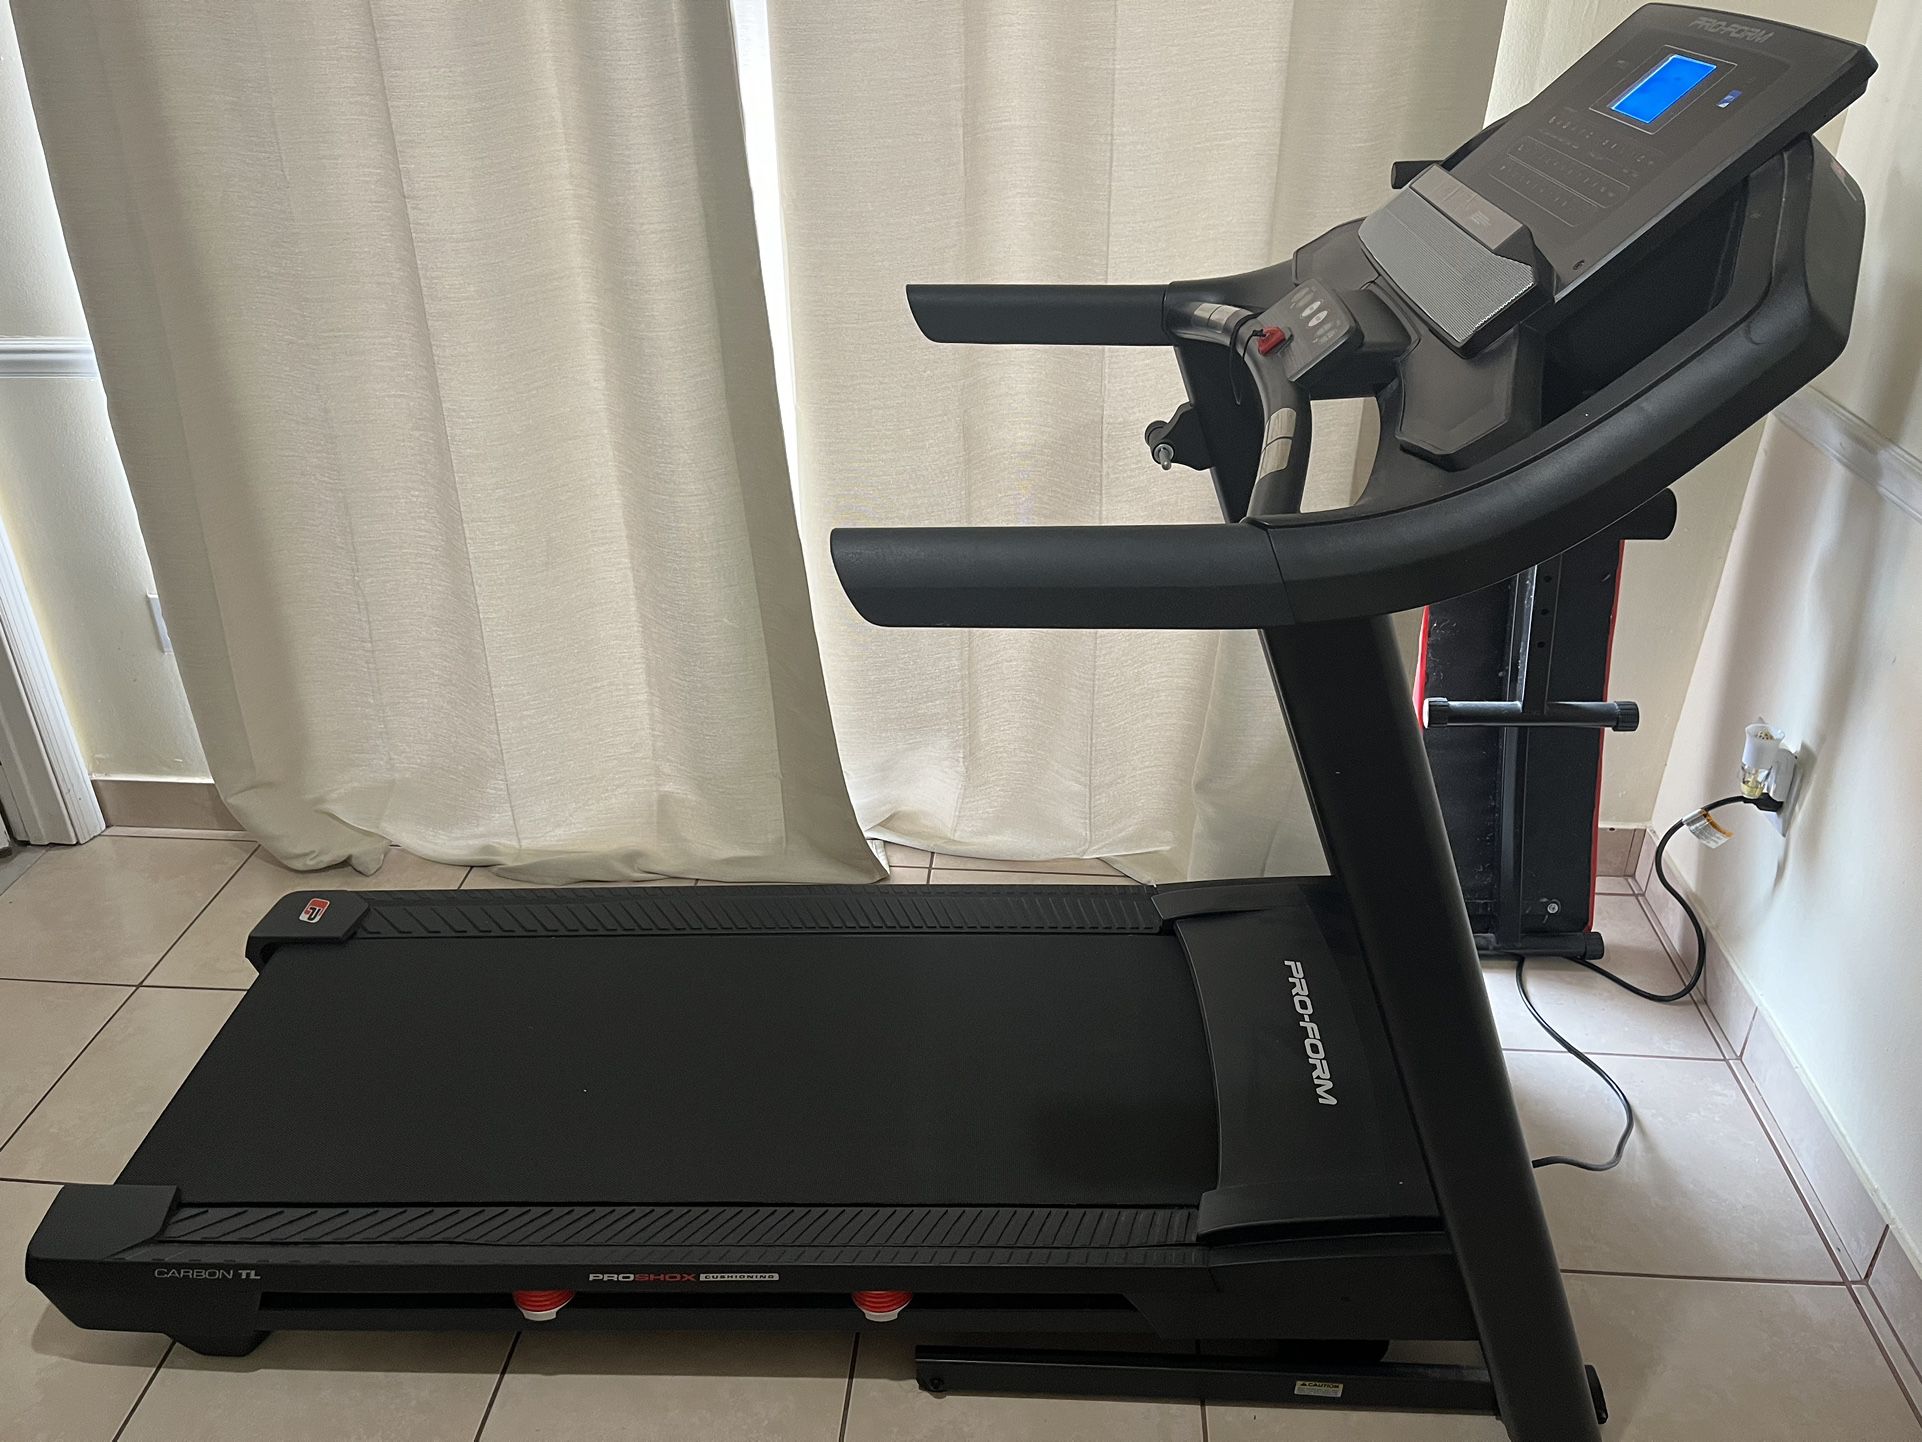  Proform Treadmill